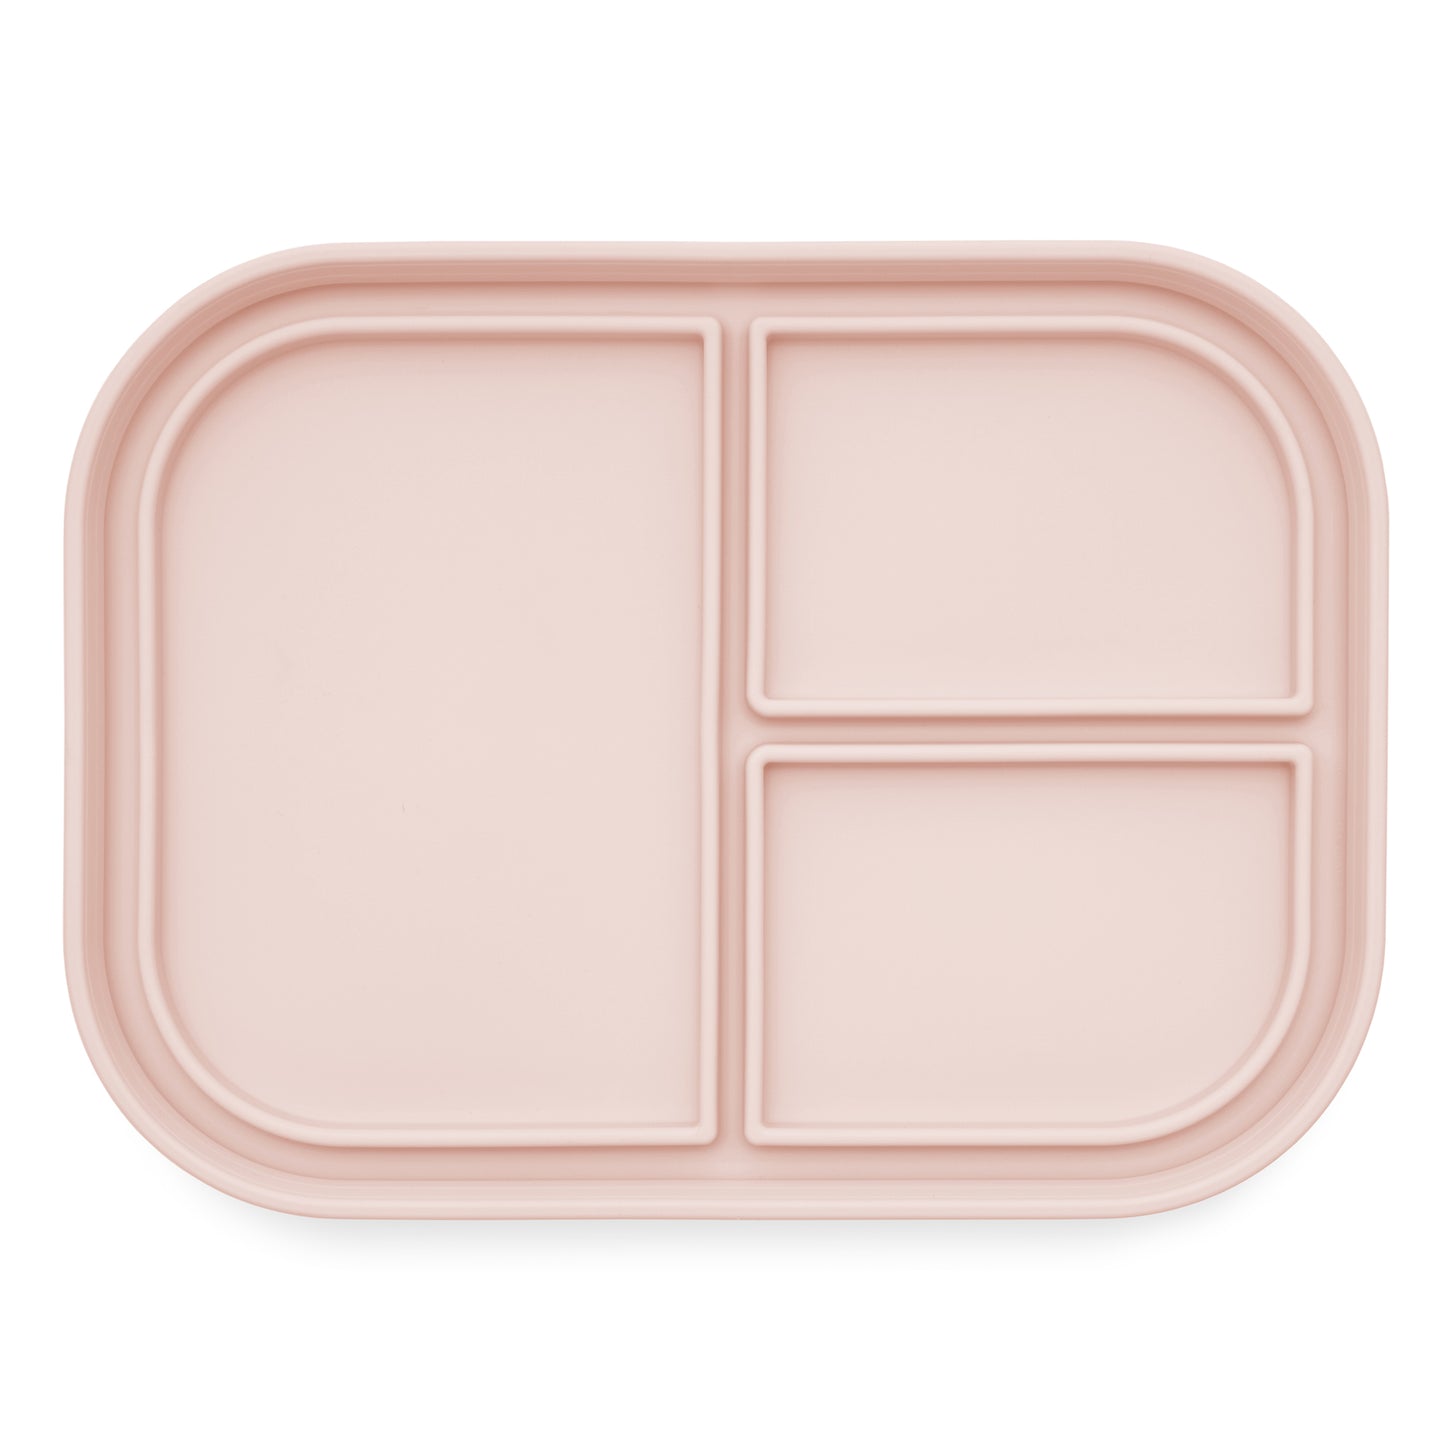 Ali+Oli Reusable Silicone Bento Box - 3 Compartments - Leakproof (Blush)